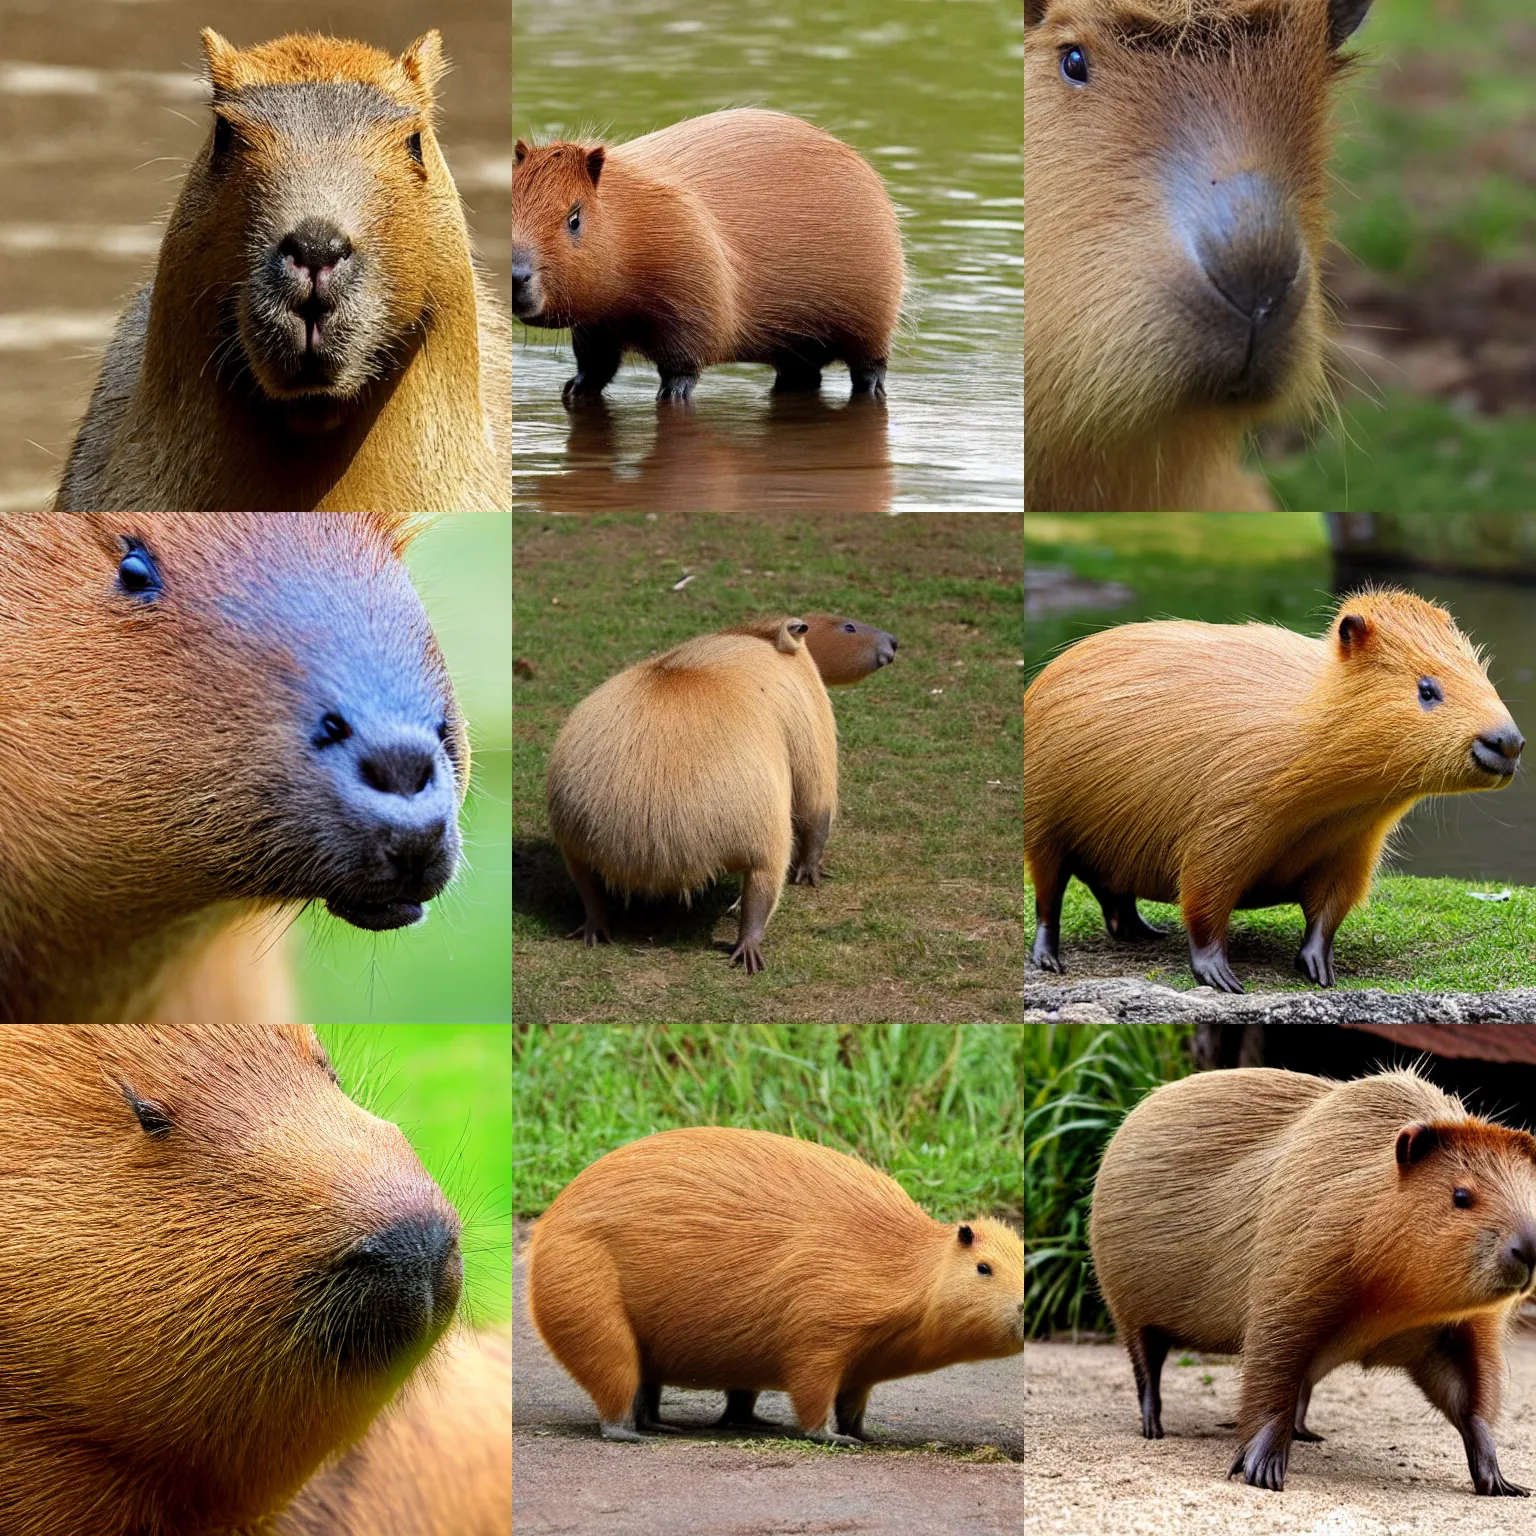 capybara3_4family_3yuさん1-31-12-